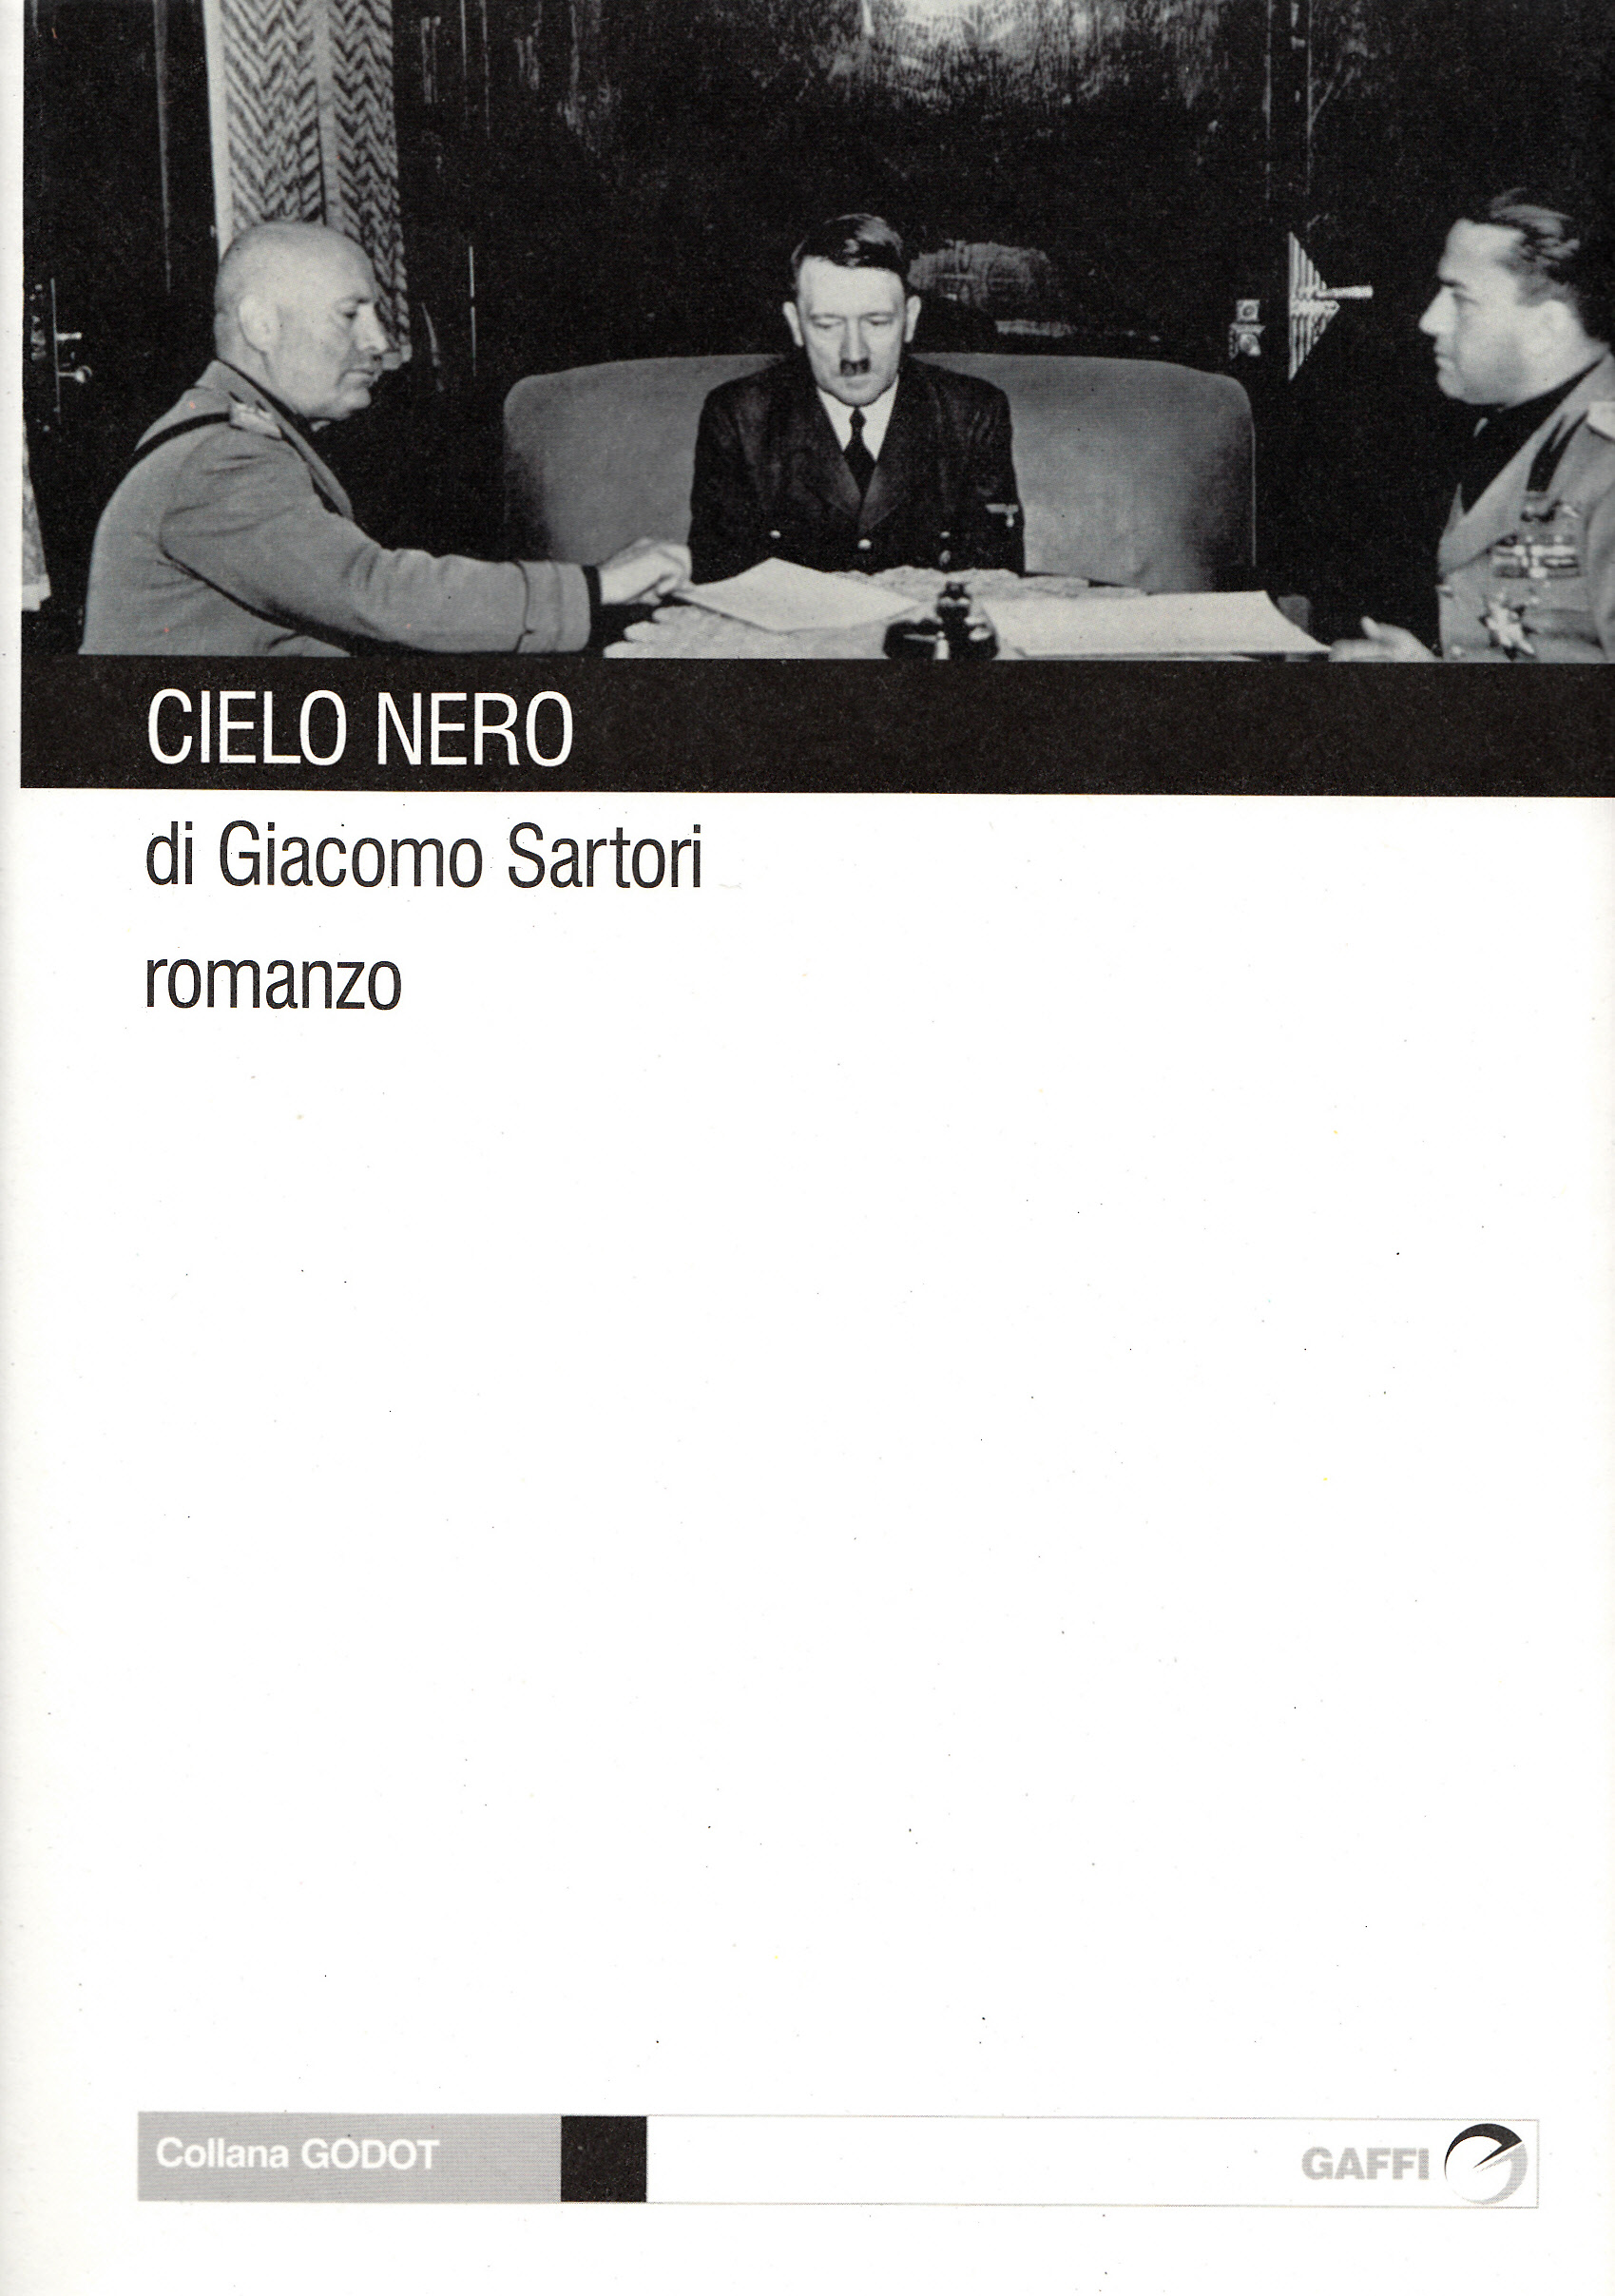 Cielo nero, Giacomo Sartori (Gaffi 2011)